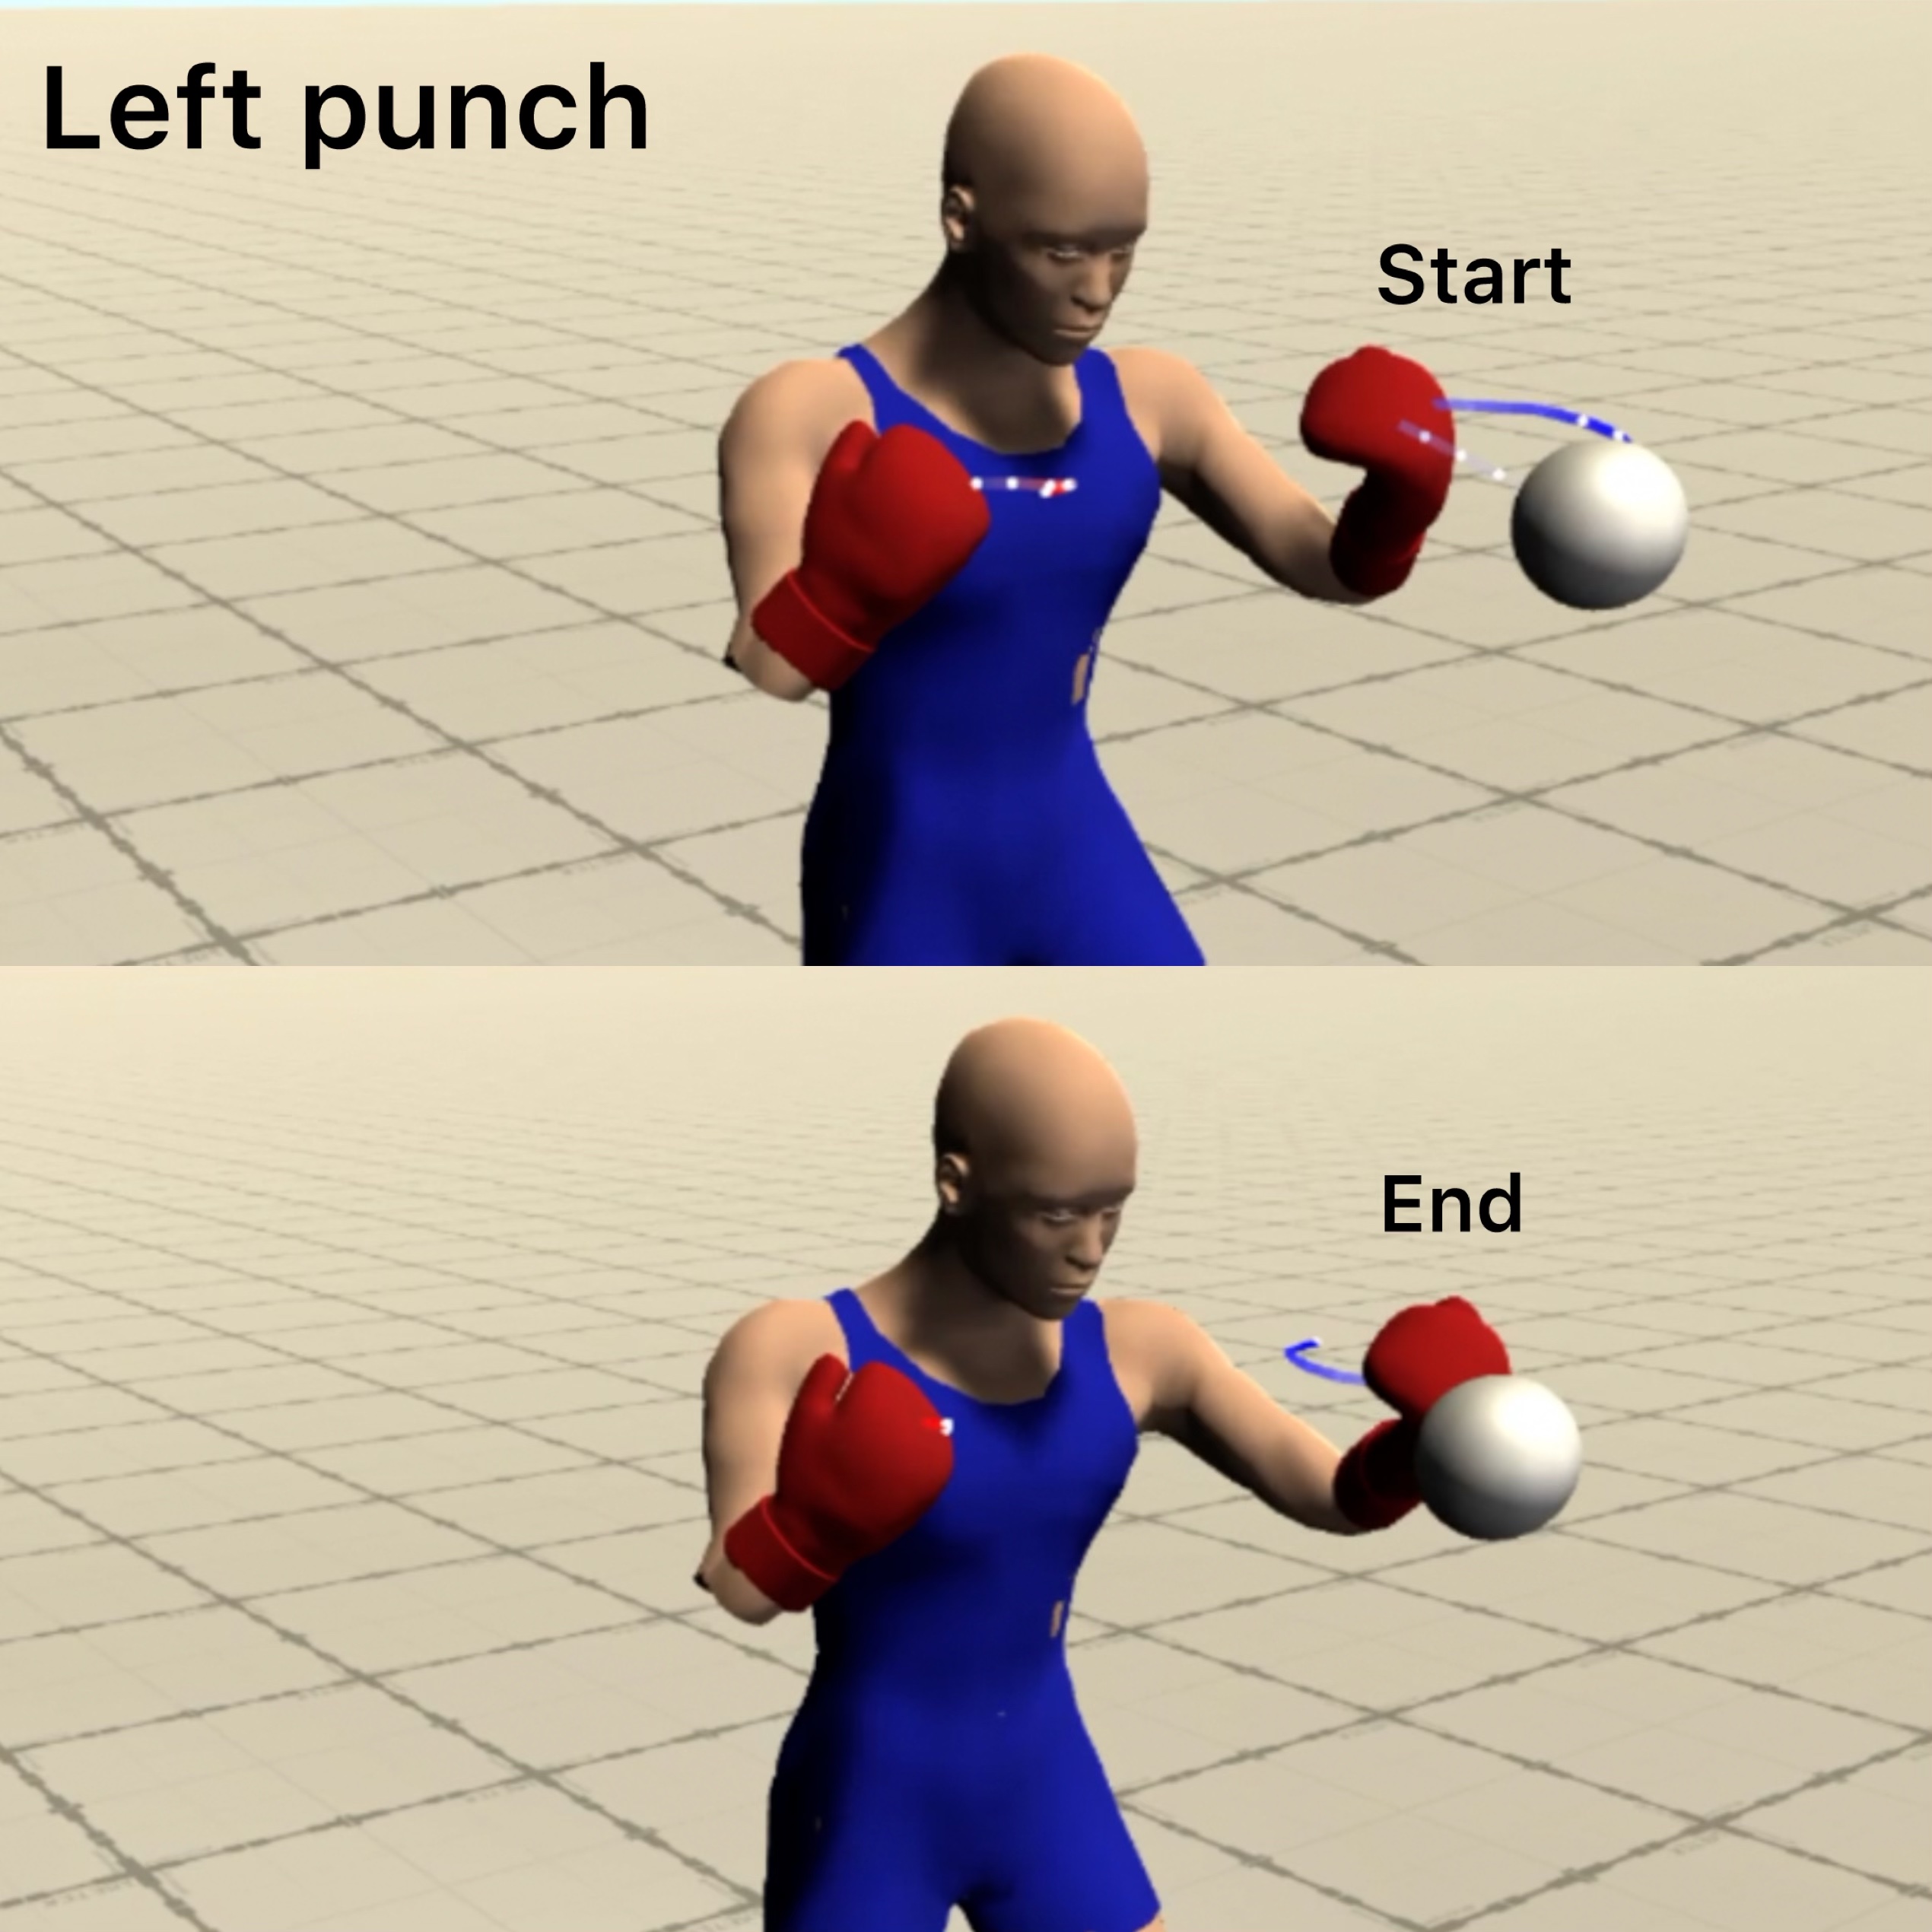 Left punch